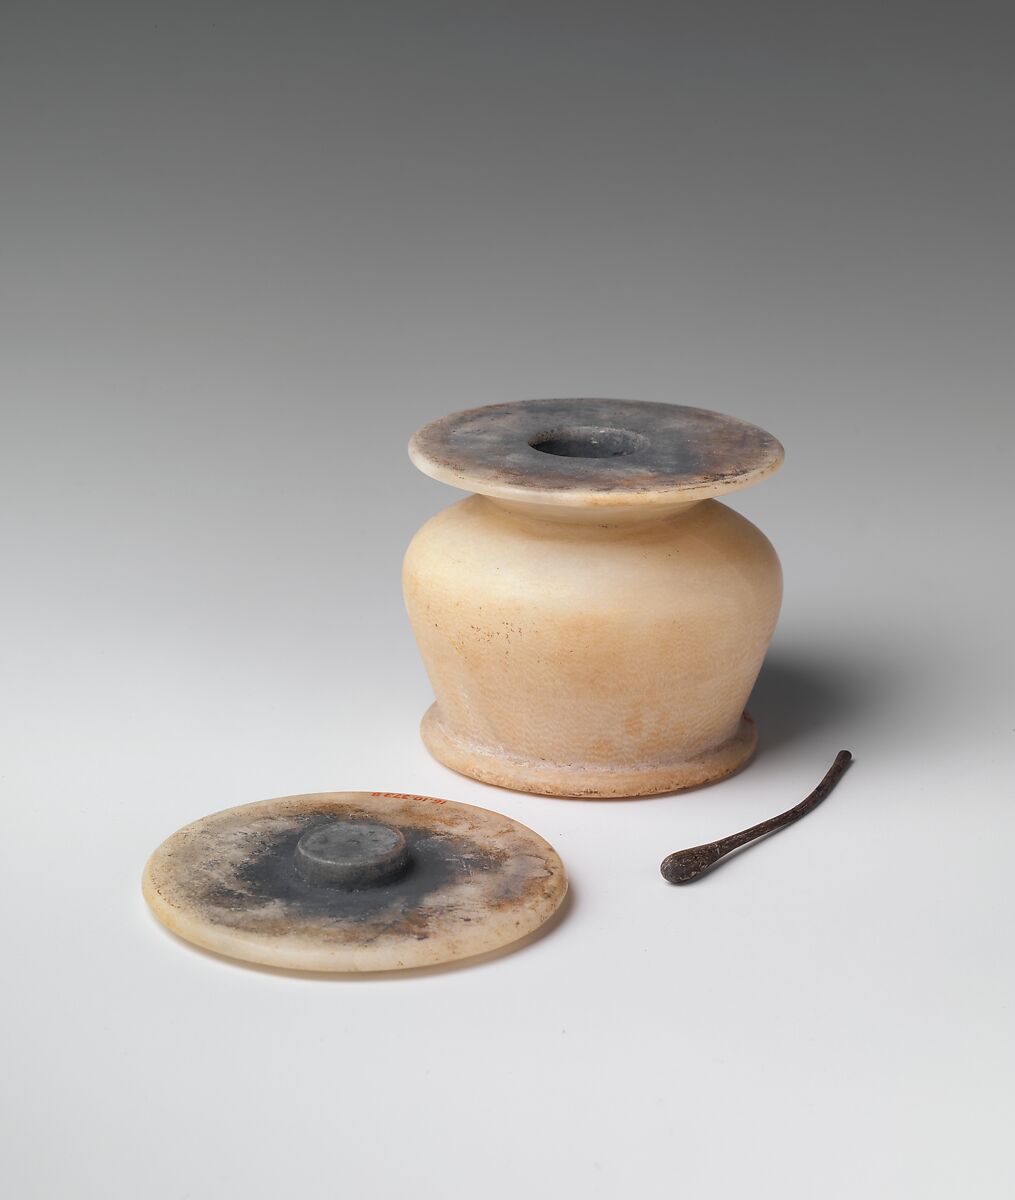 Kohl Jar and Stick (with 16.10.373c), Travertine (Egyptian alabaster) 